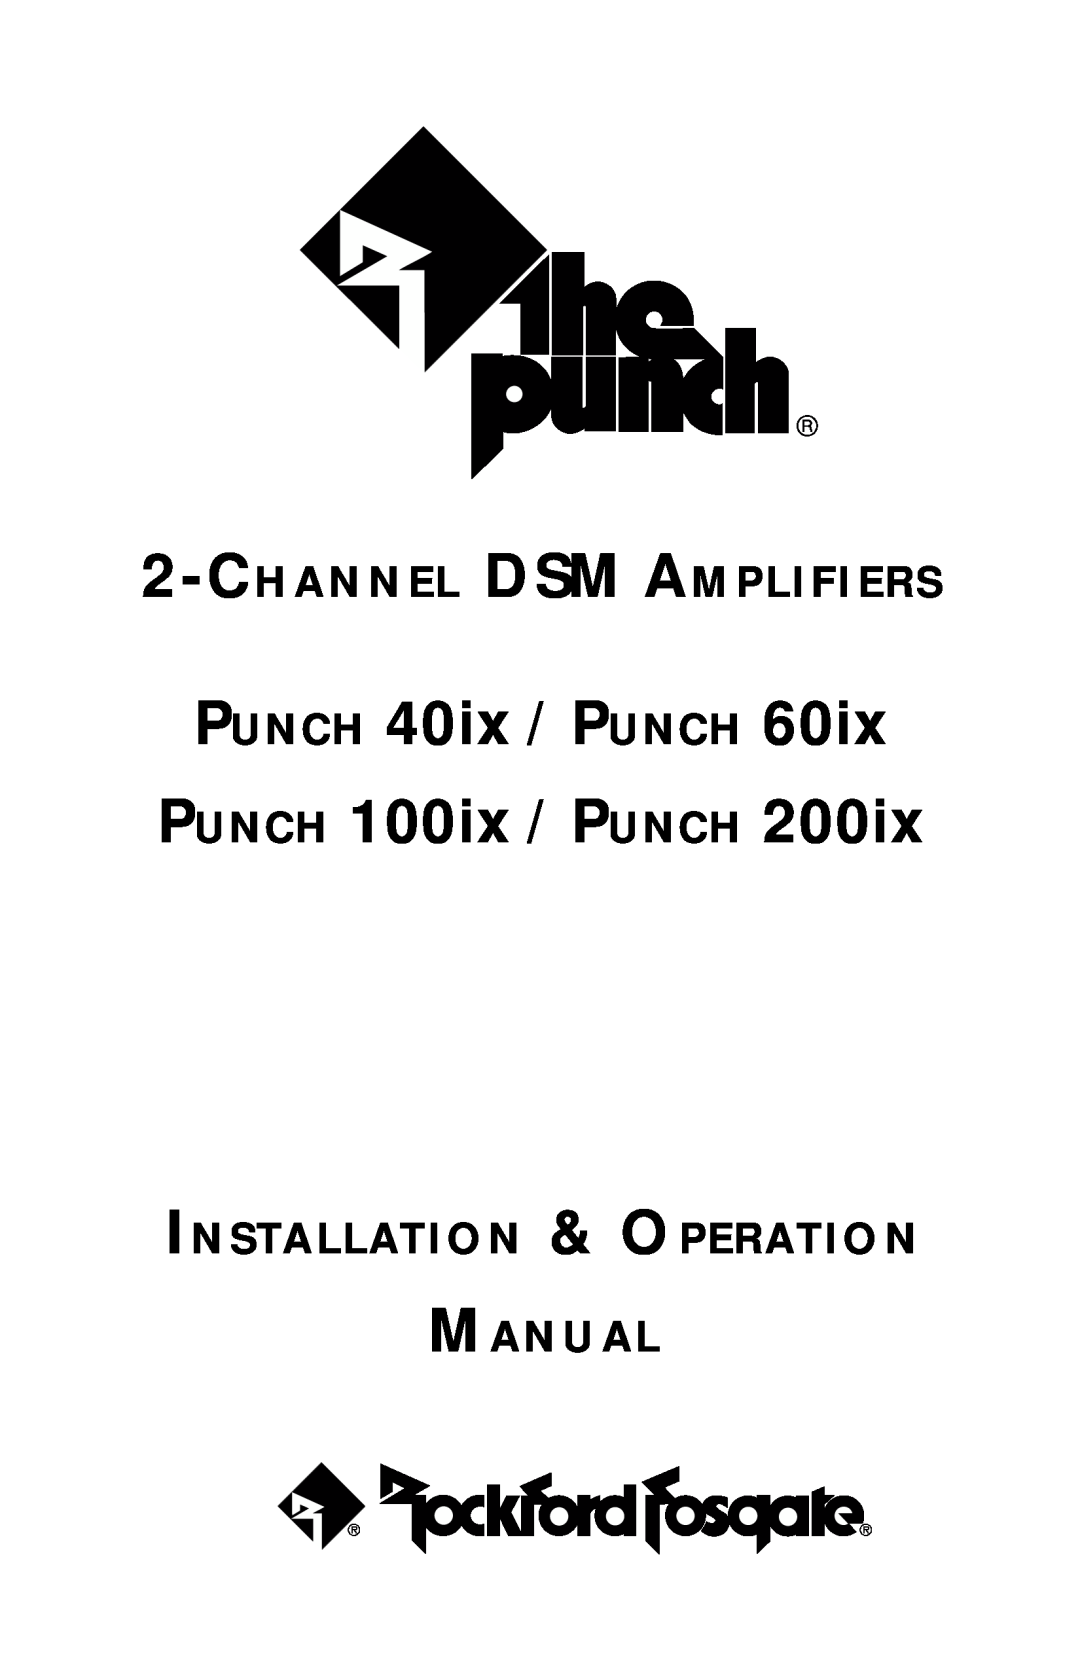 Rockford Fosgate 200ix operation manual PUNCH 40ix / PUNCH 60ix PUNCH 100ix / PUNCH, Channel Dsm Amplifiers 